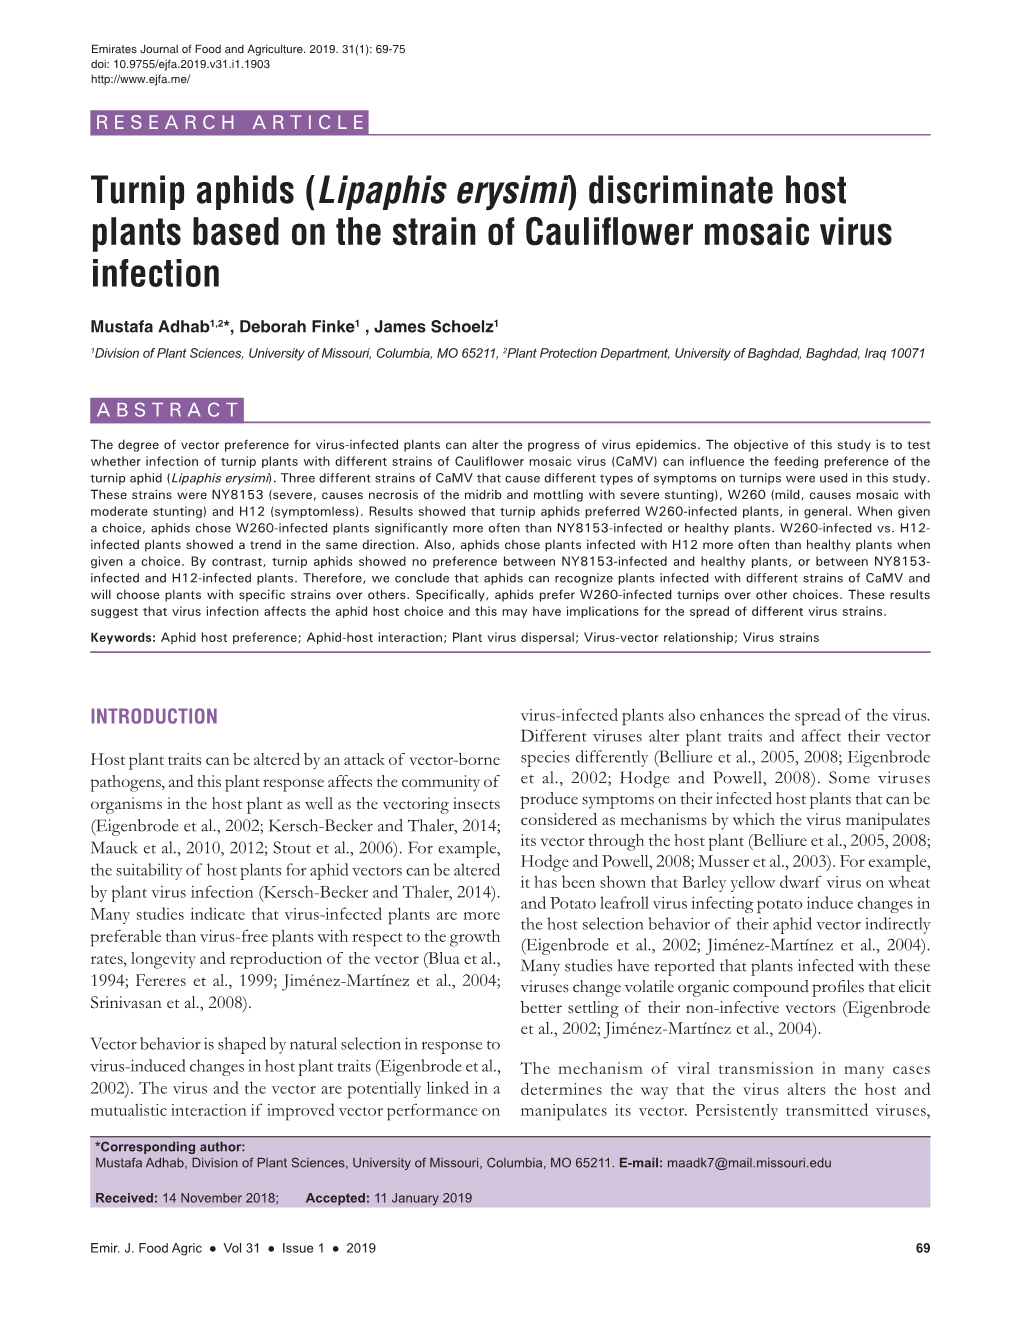 Turnip Aphids (Lipaphis Erysimi) Discriminate Host Plants Based on the Strain of Cauliflower Mosaic Virus Infection